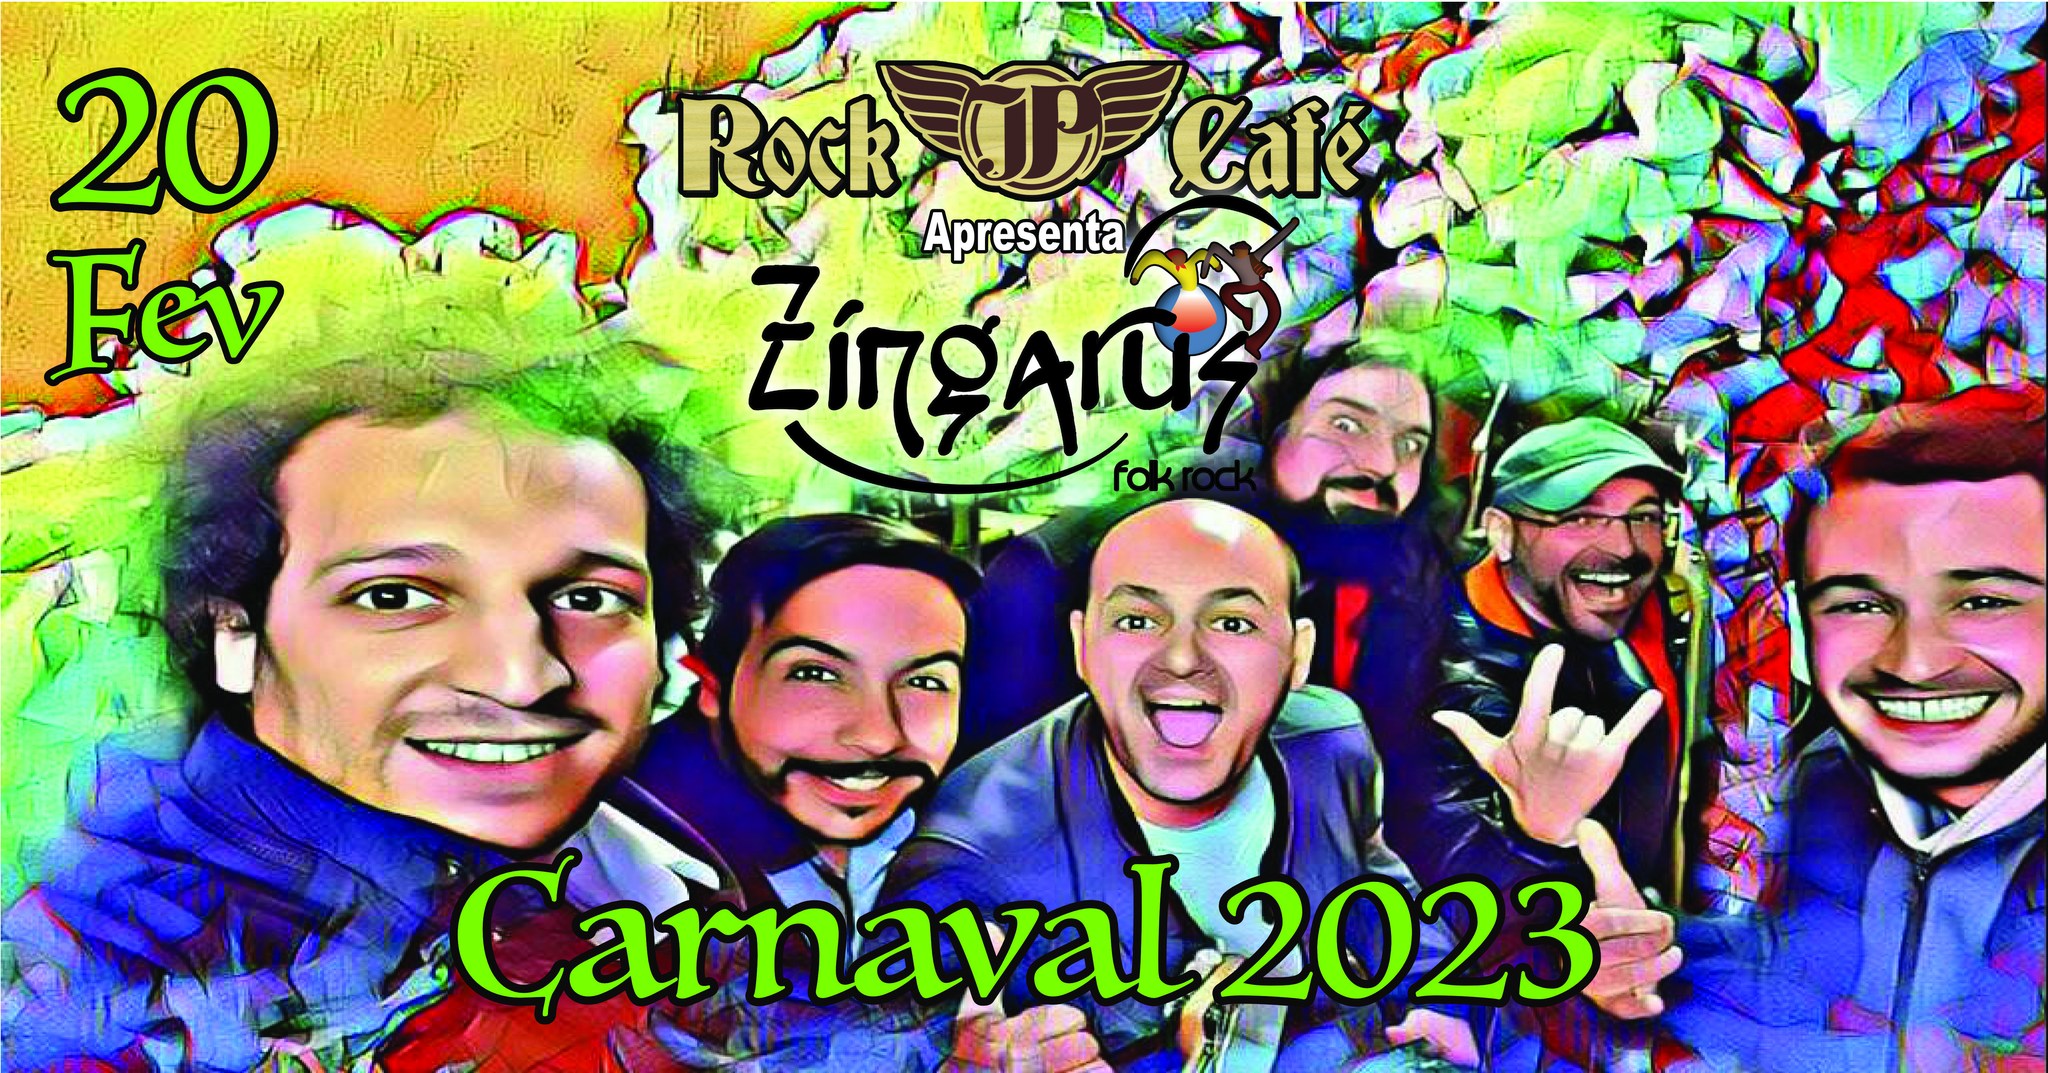 Carnaval 2023 * Zíngarus *